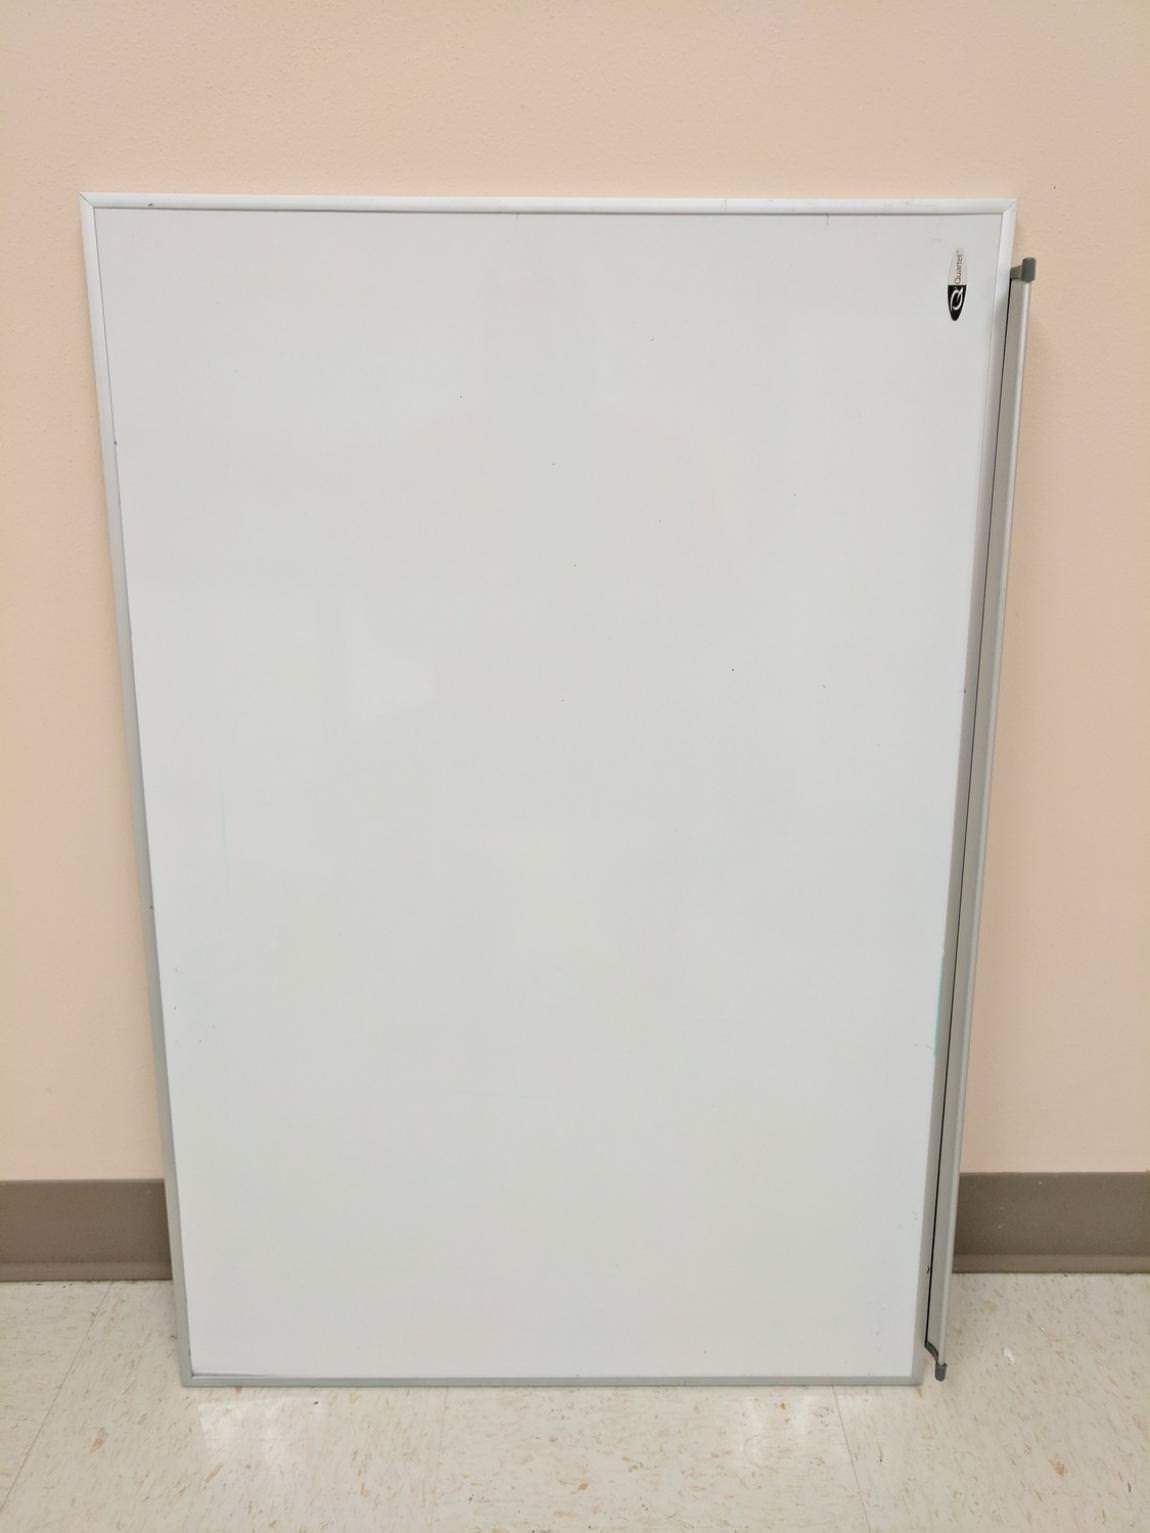 34x23 Quartet Dry Erase Whiteboard